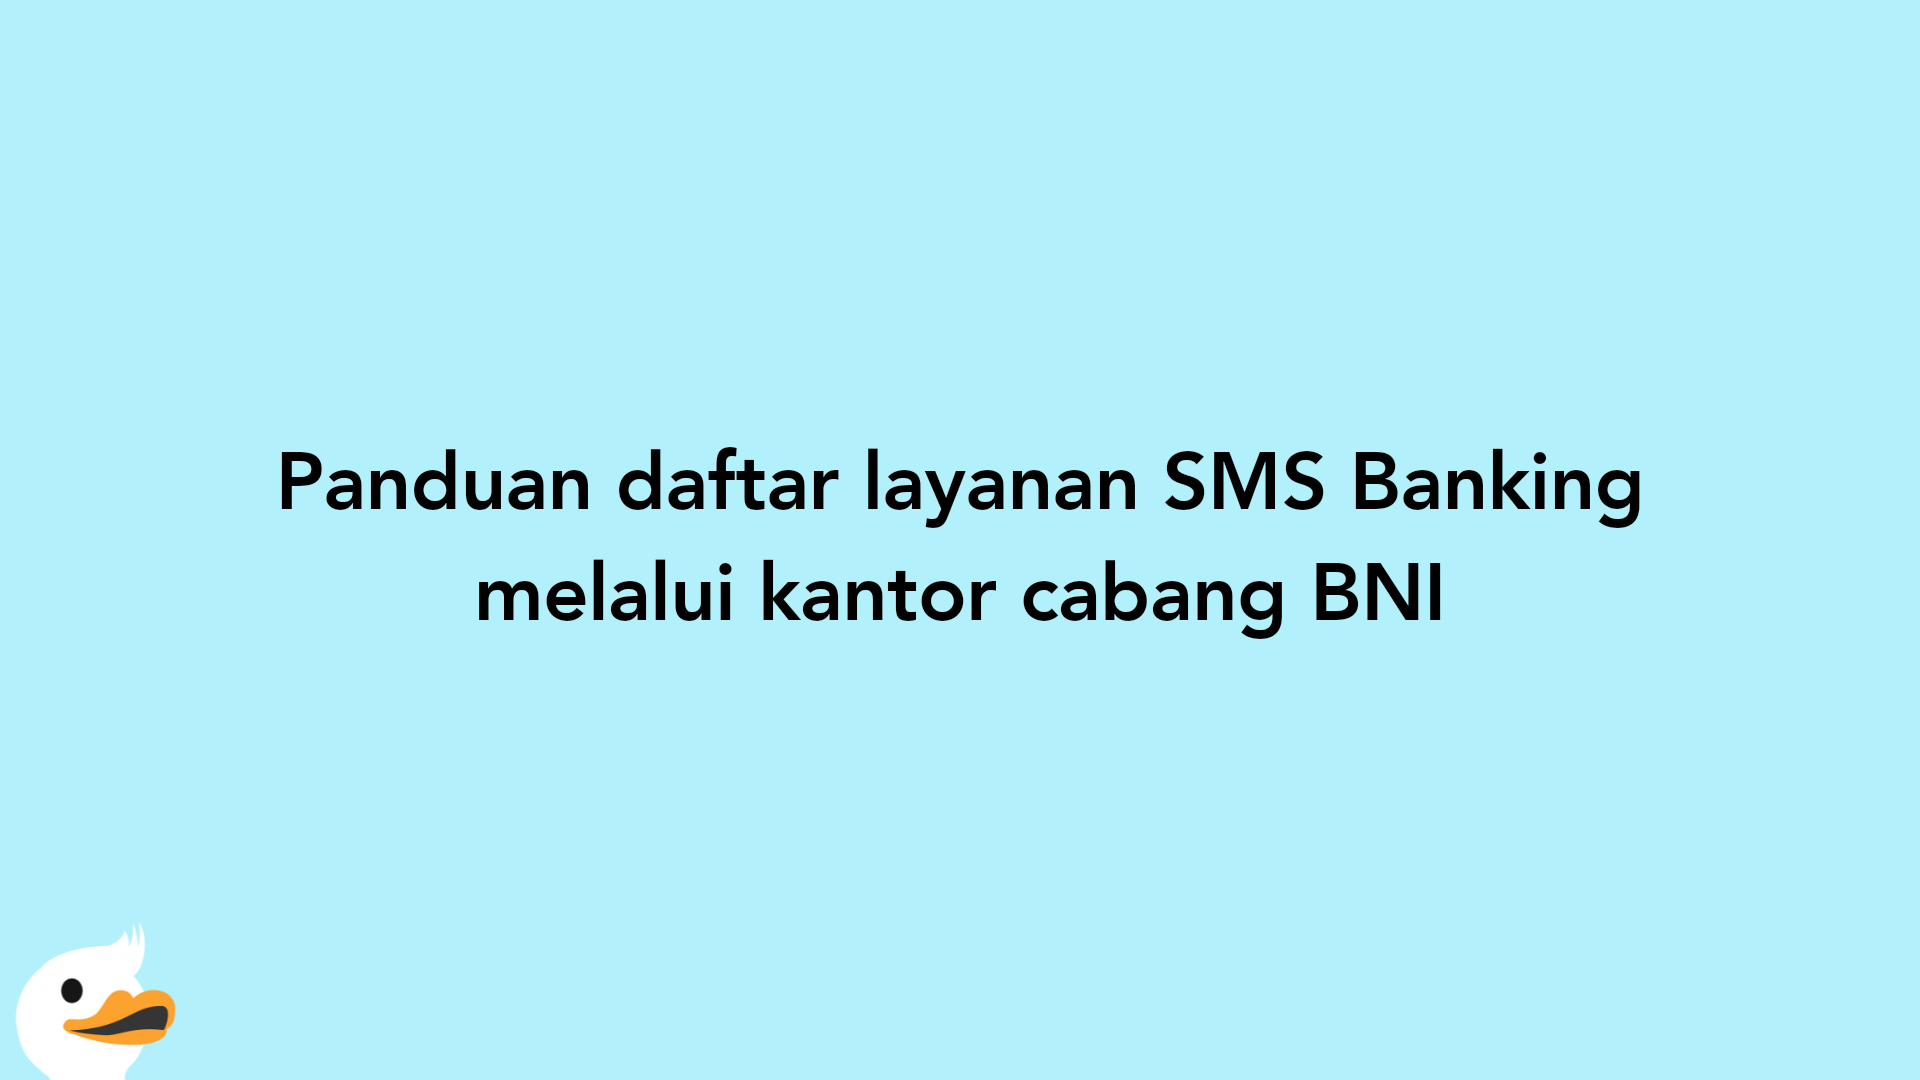 Panduan daftar layanan SMS Banking melalui kantor cabang BNI